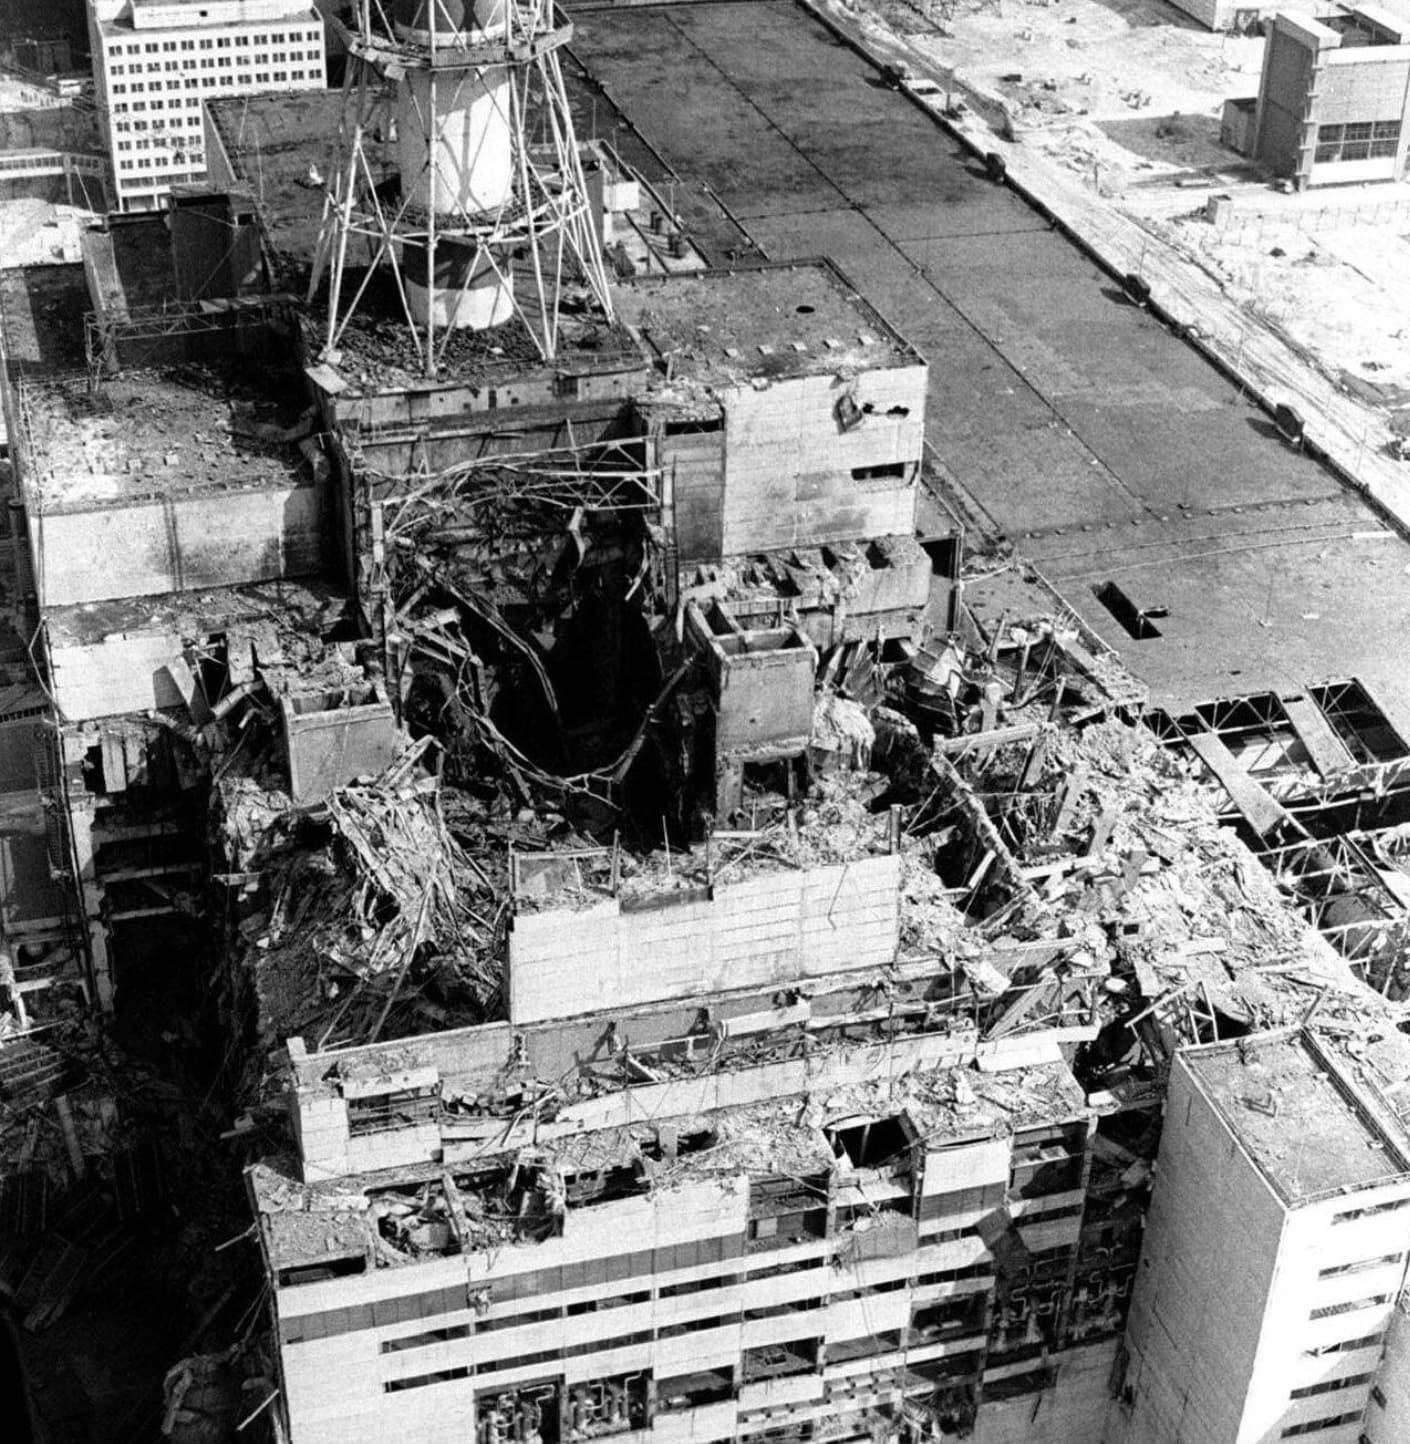 chernobyl reactor 4 aftermath